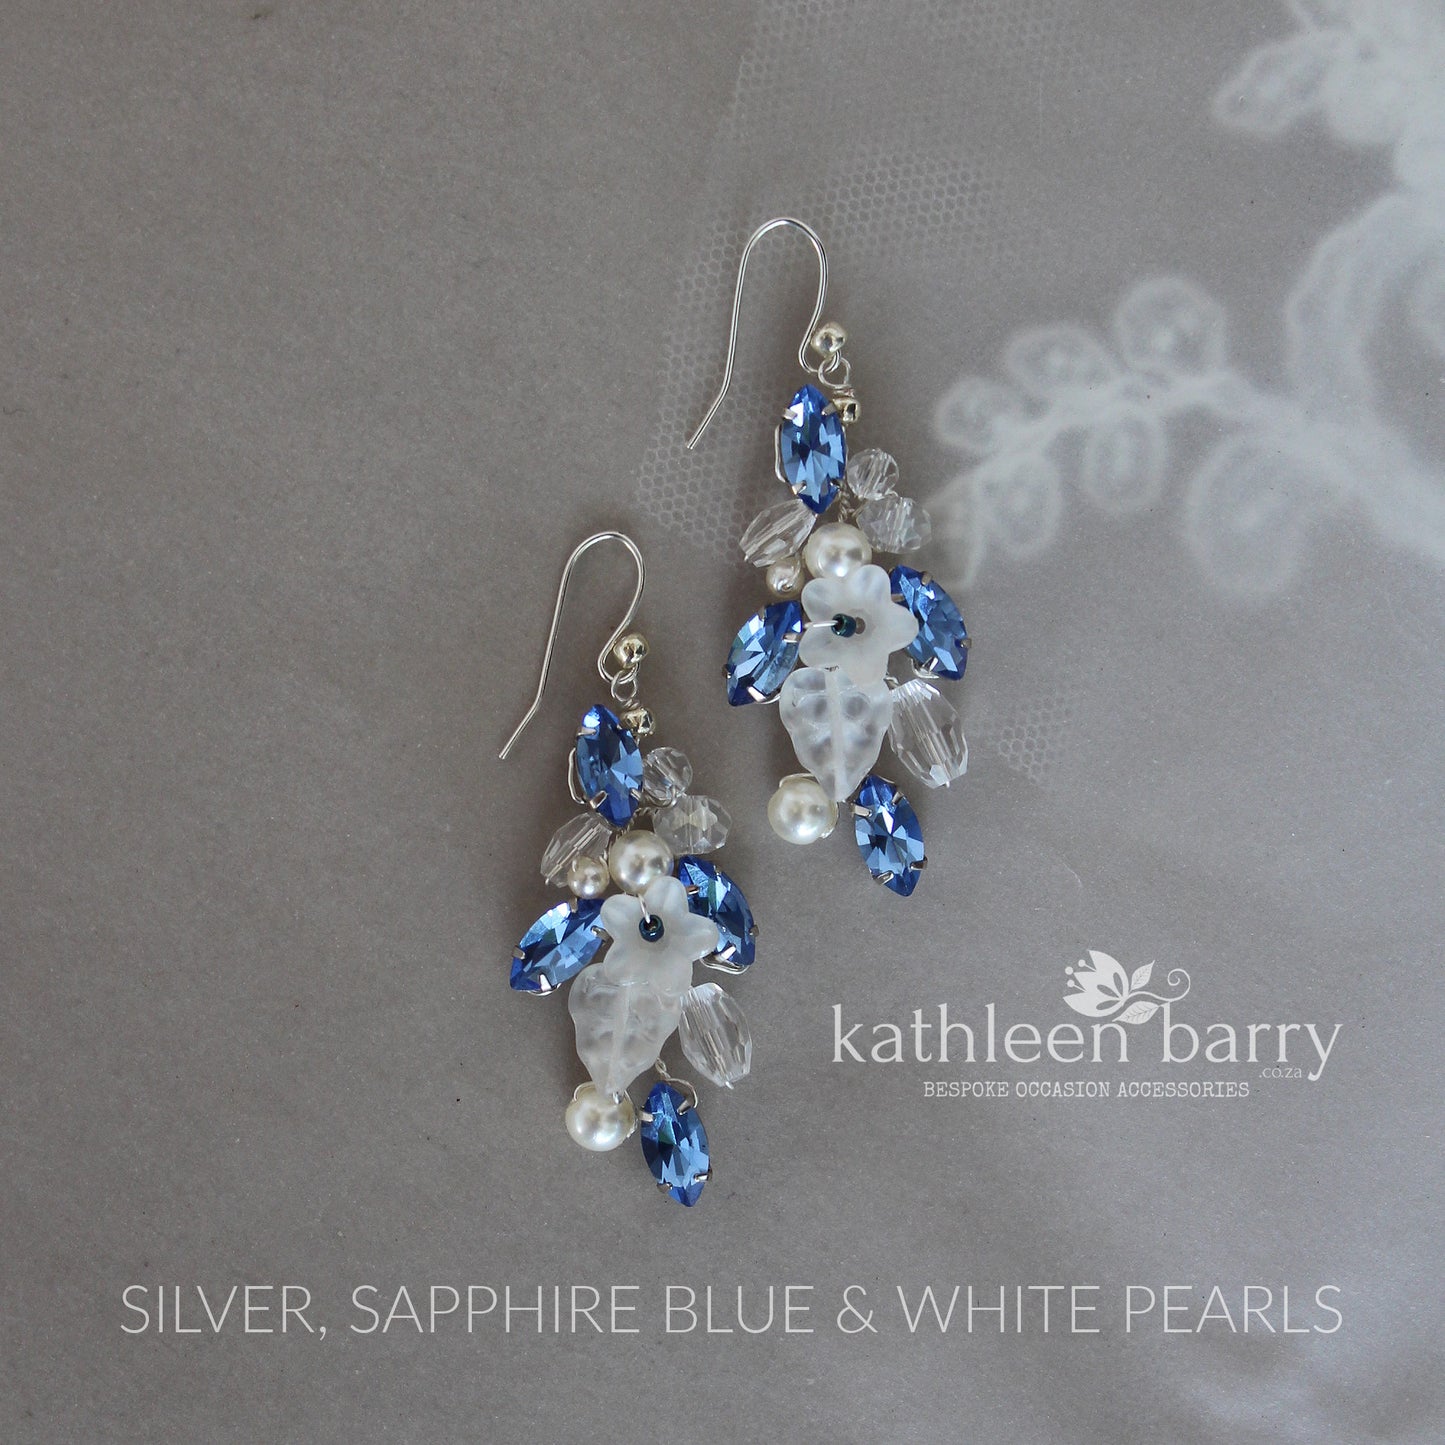 Noa Rhinestone floral earrings - custom colors available - Statement earrings